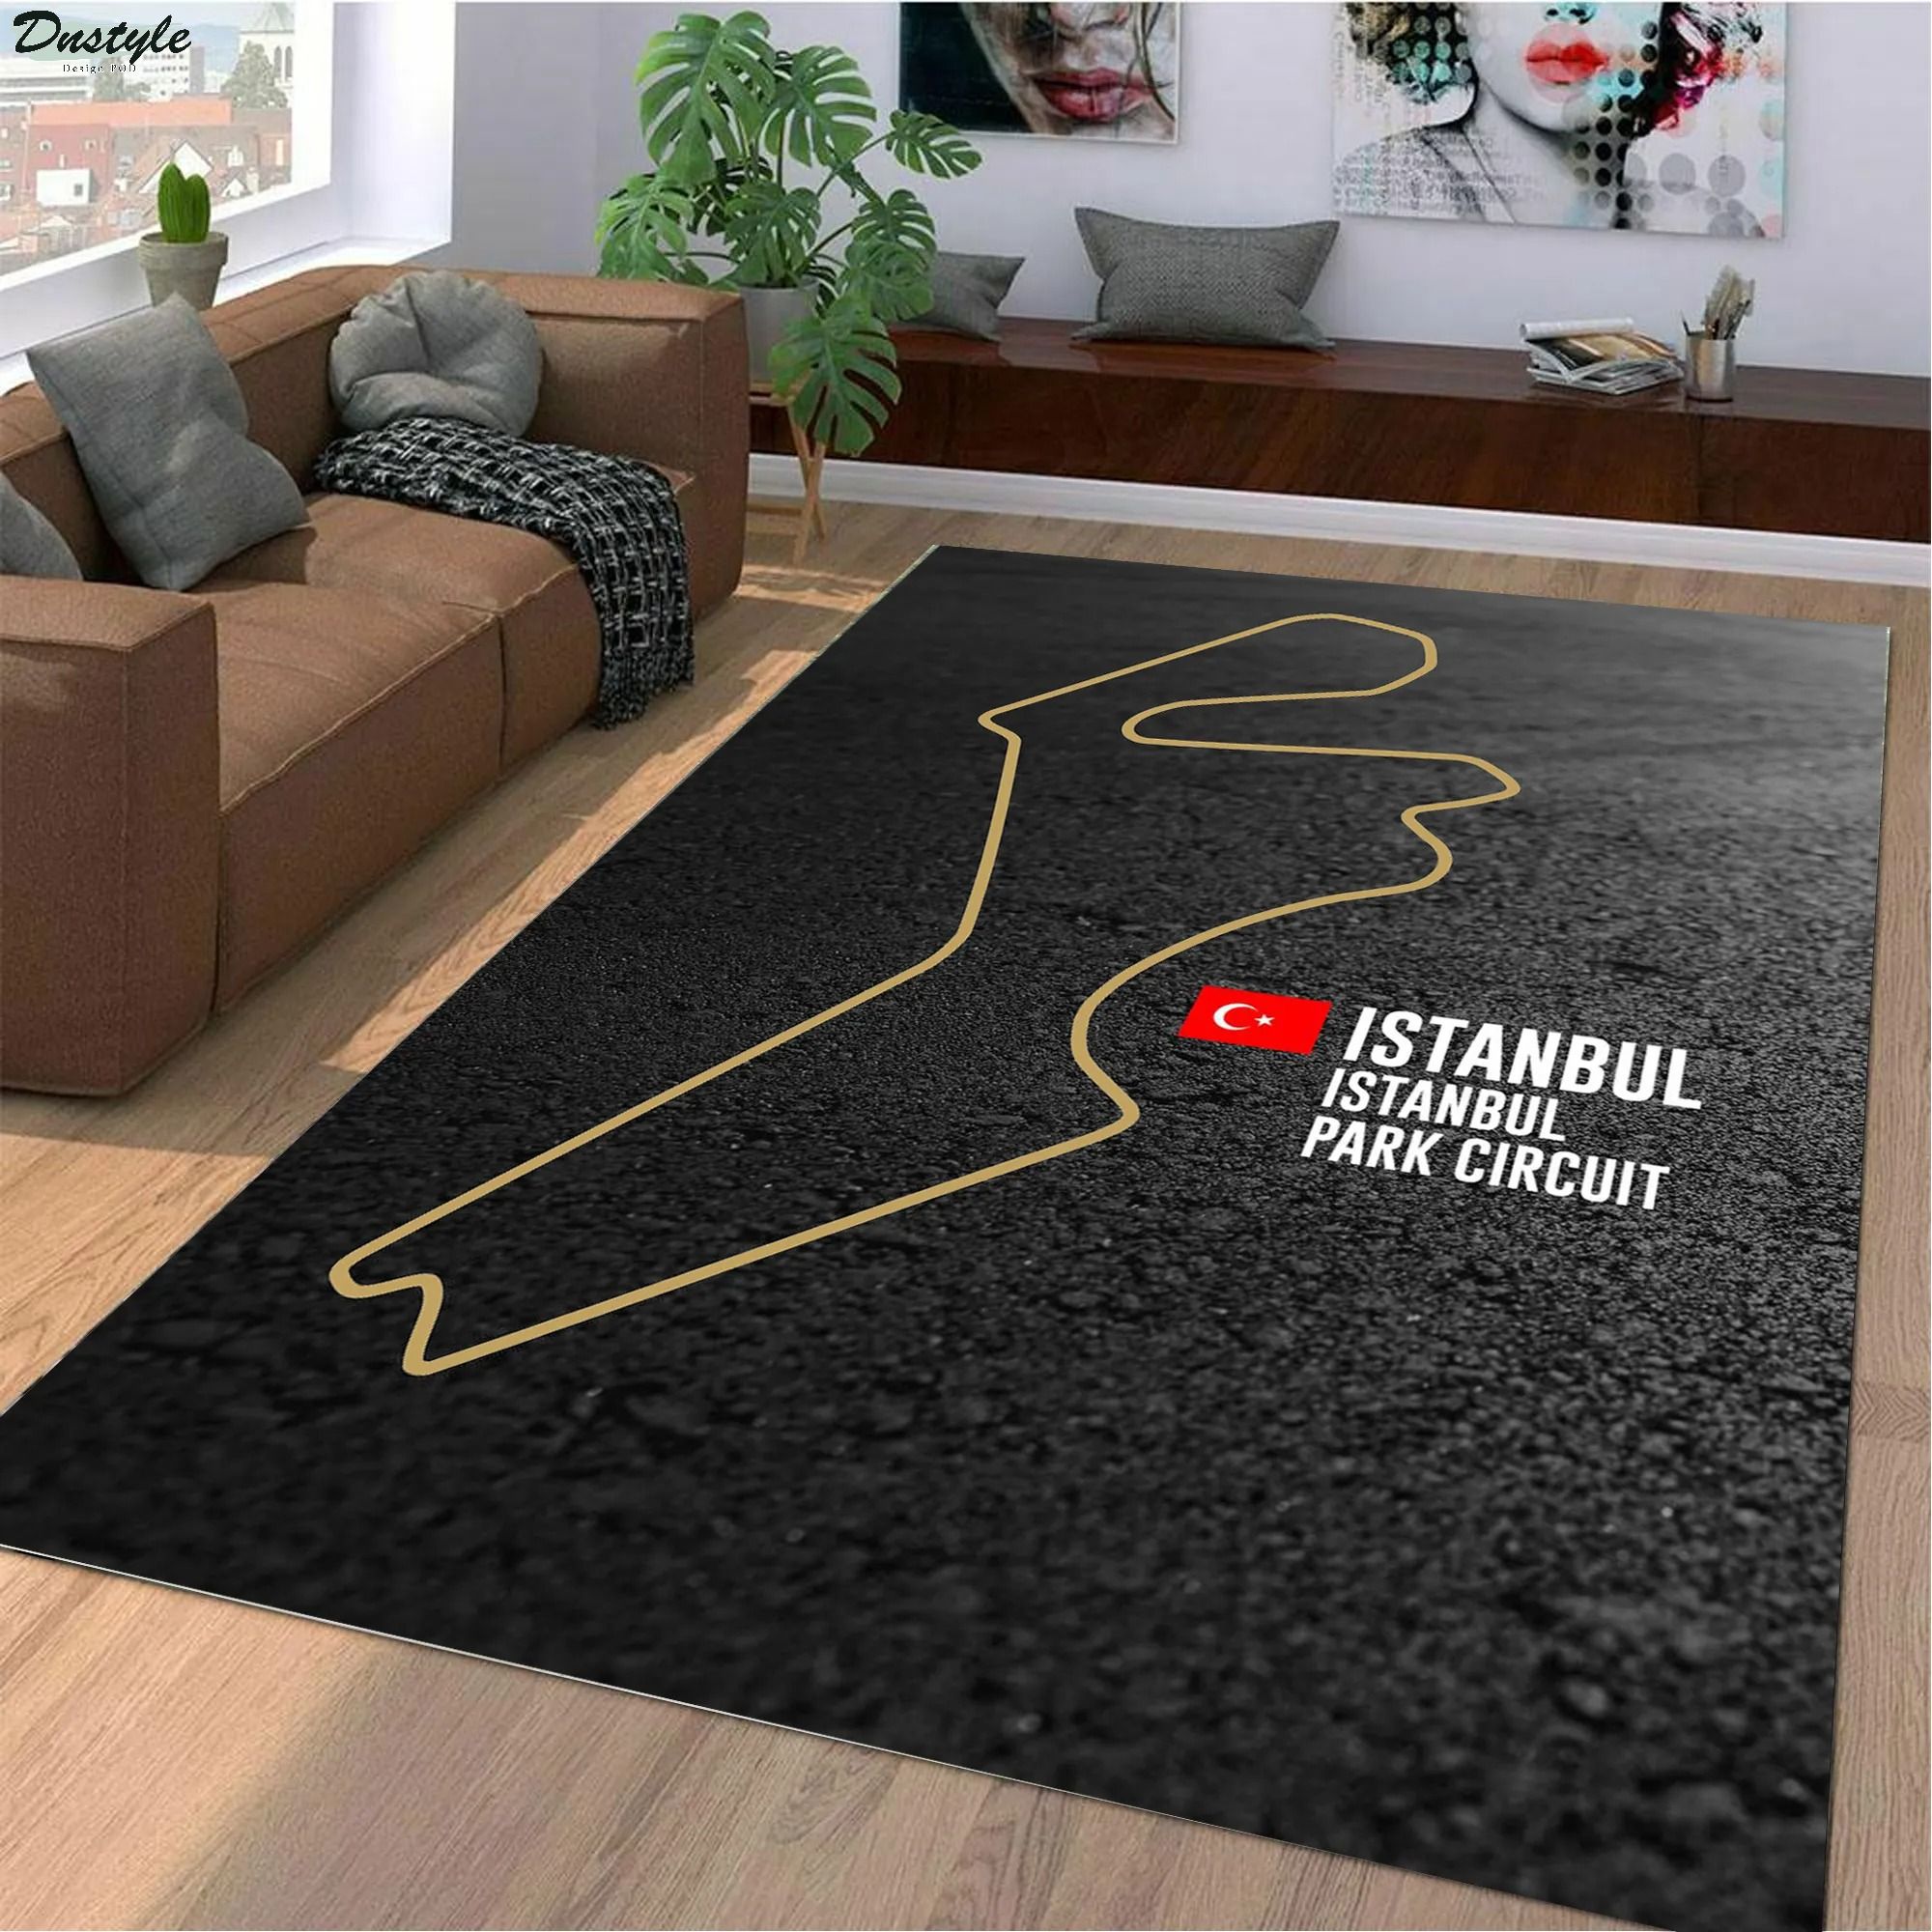 Istanbul park circuit f1 track rug